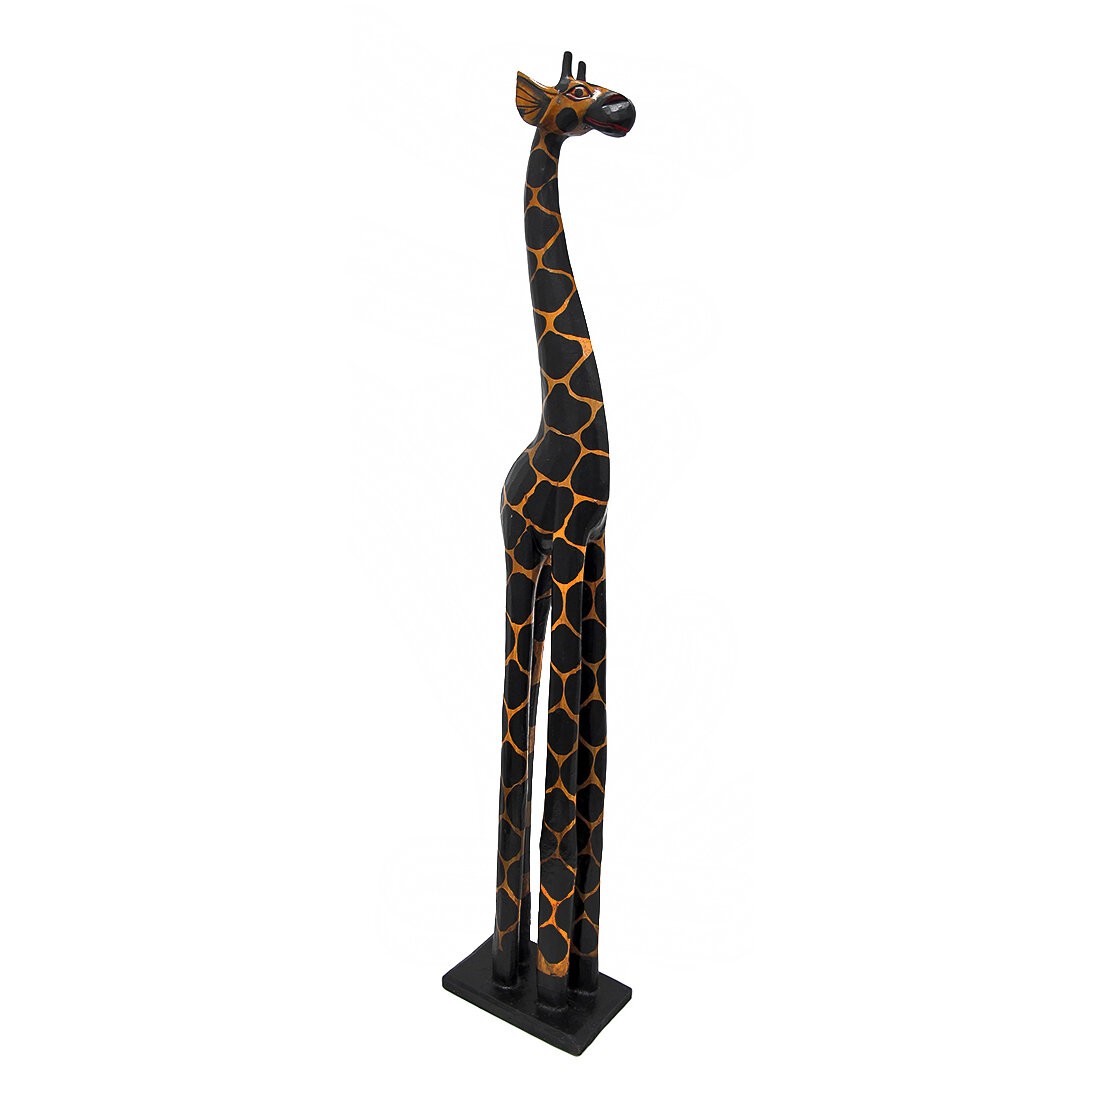 3 Foot Tall Hand-Carved Wooden Giraffe Statue Decor